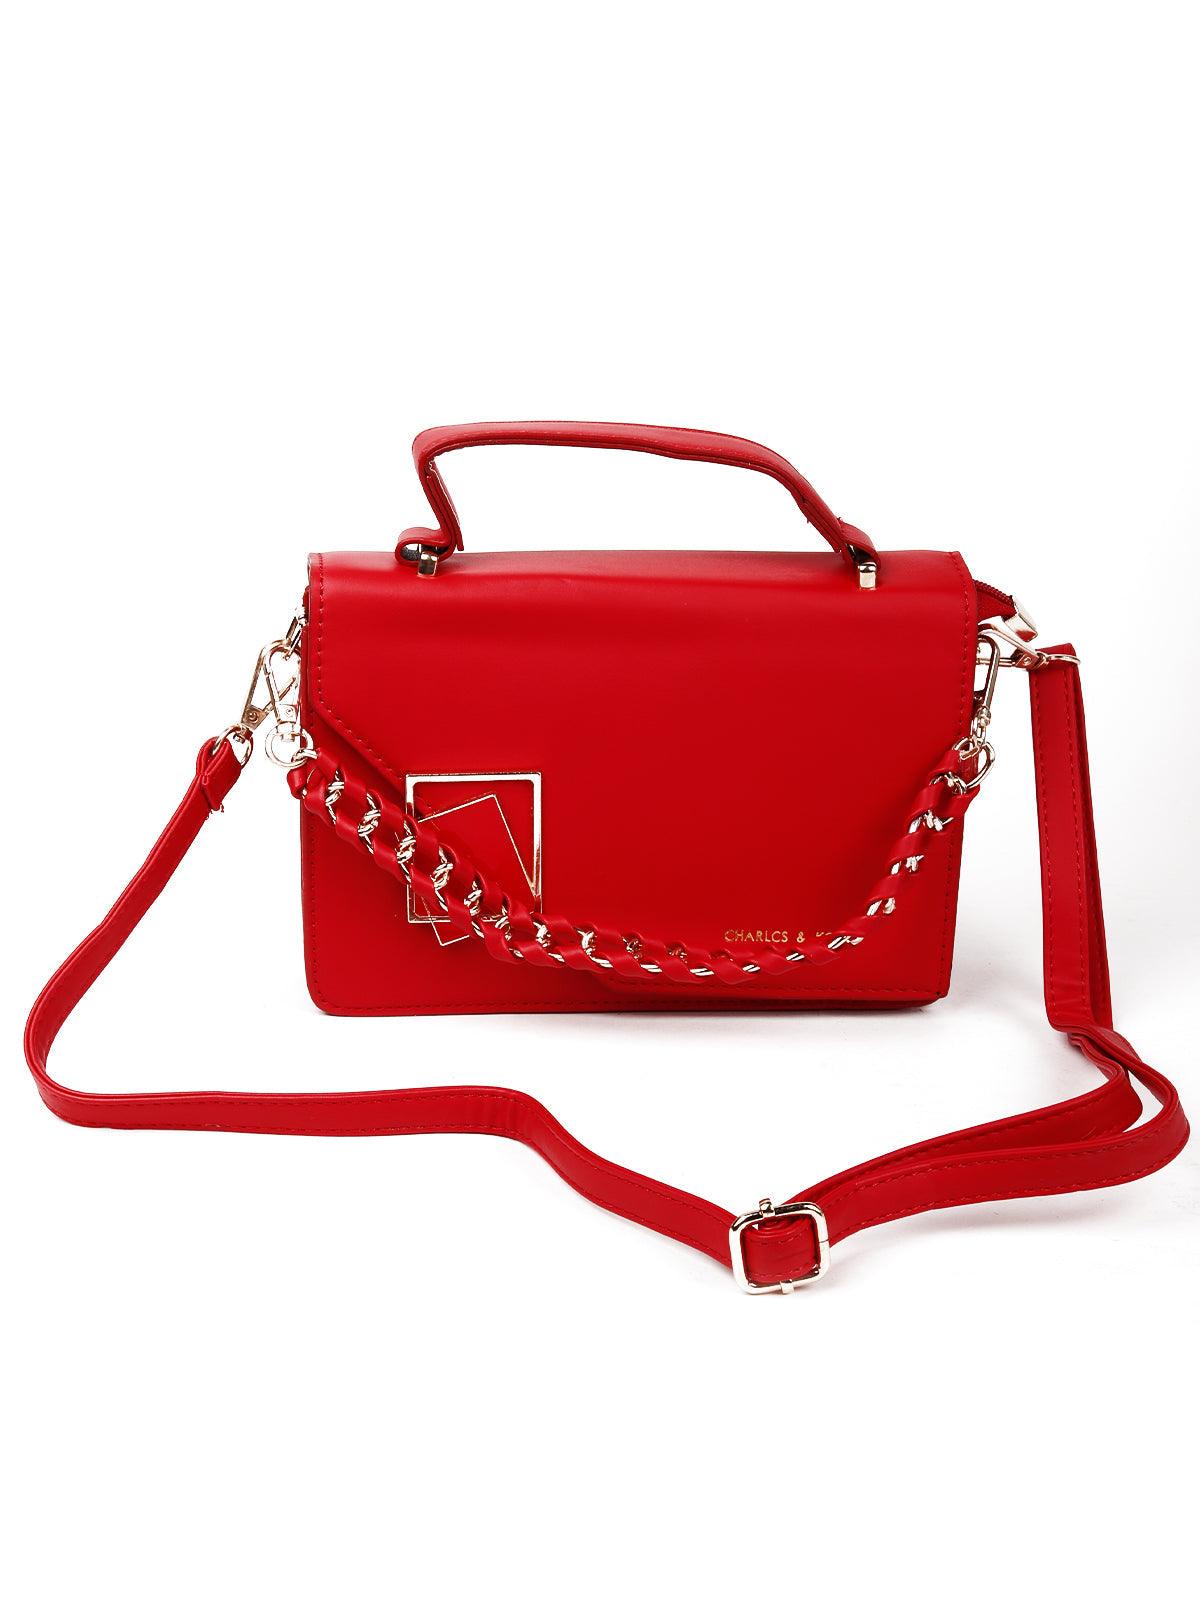 Cherry red statement smooth sling bag - Odette